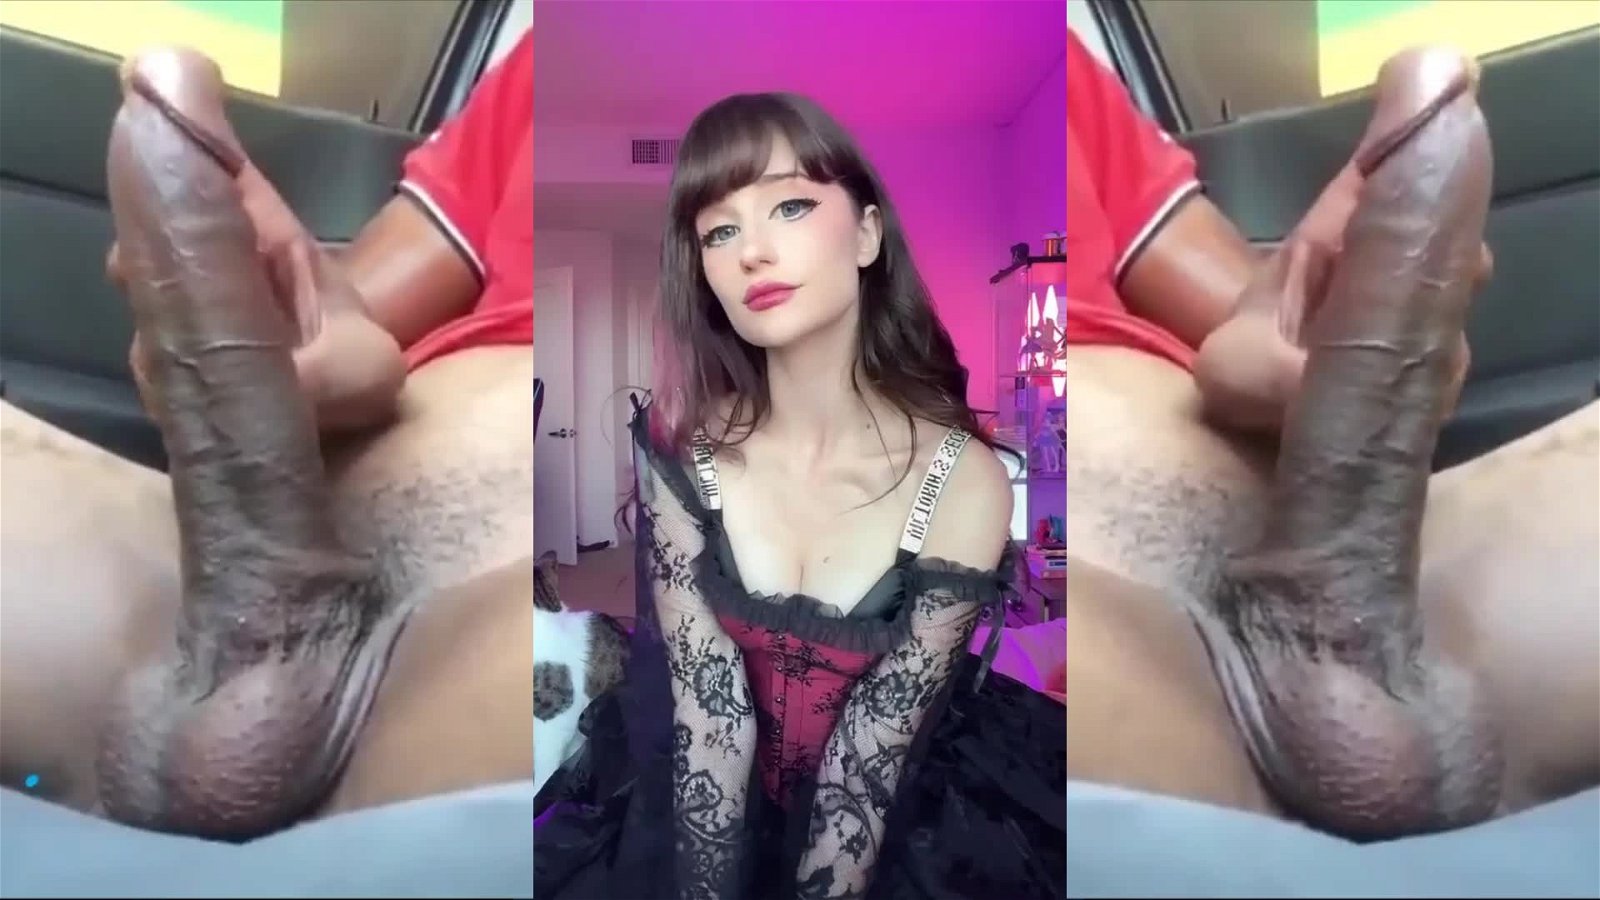 Video post by LateNightTrickyDick